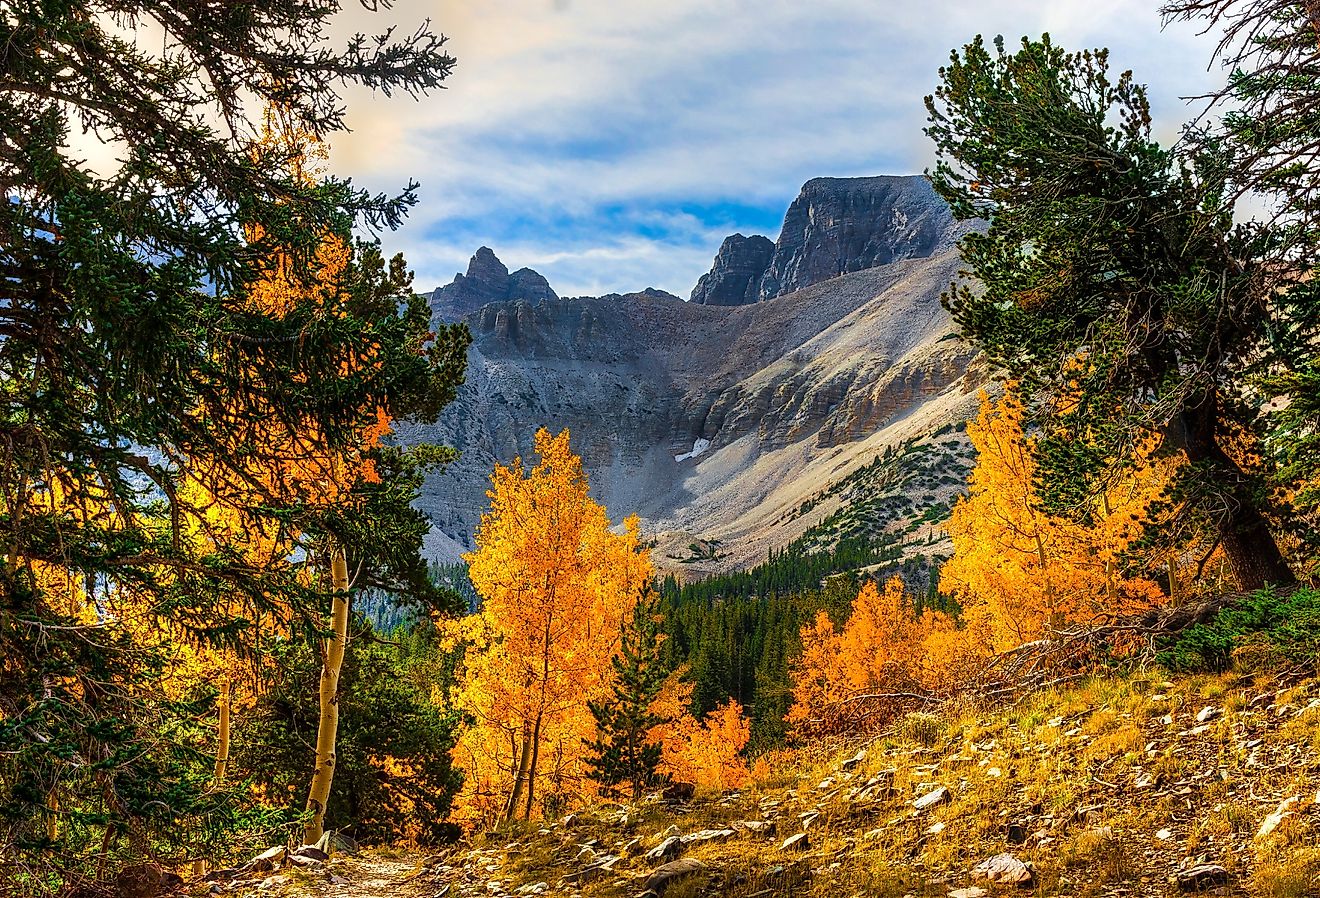 Wheeler Peak-Great Basin National Park, Nevada in the fall.